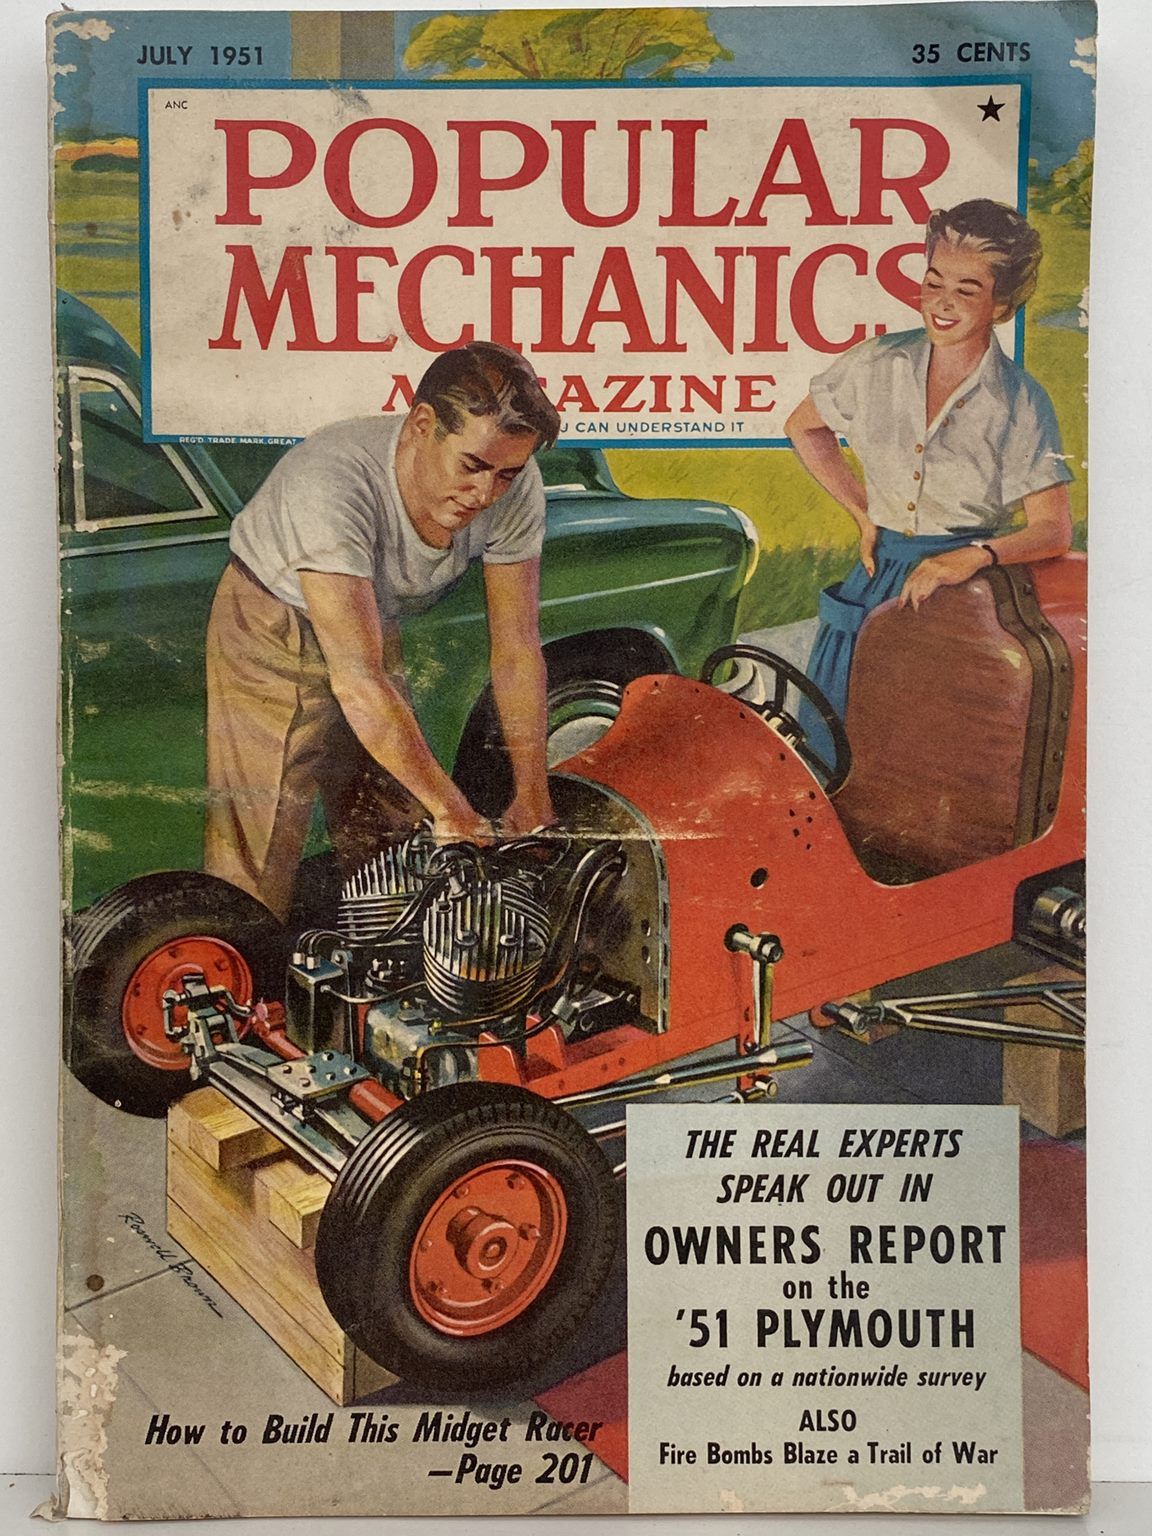 VINTAGE MAGAZINE: Popular Mechanics - Vol. 96, No. 1 - July 1951